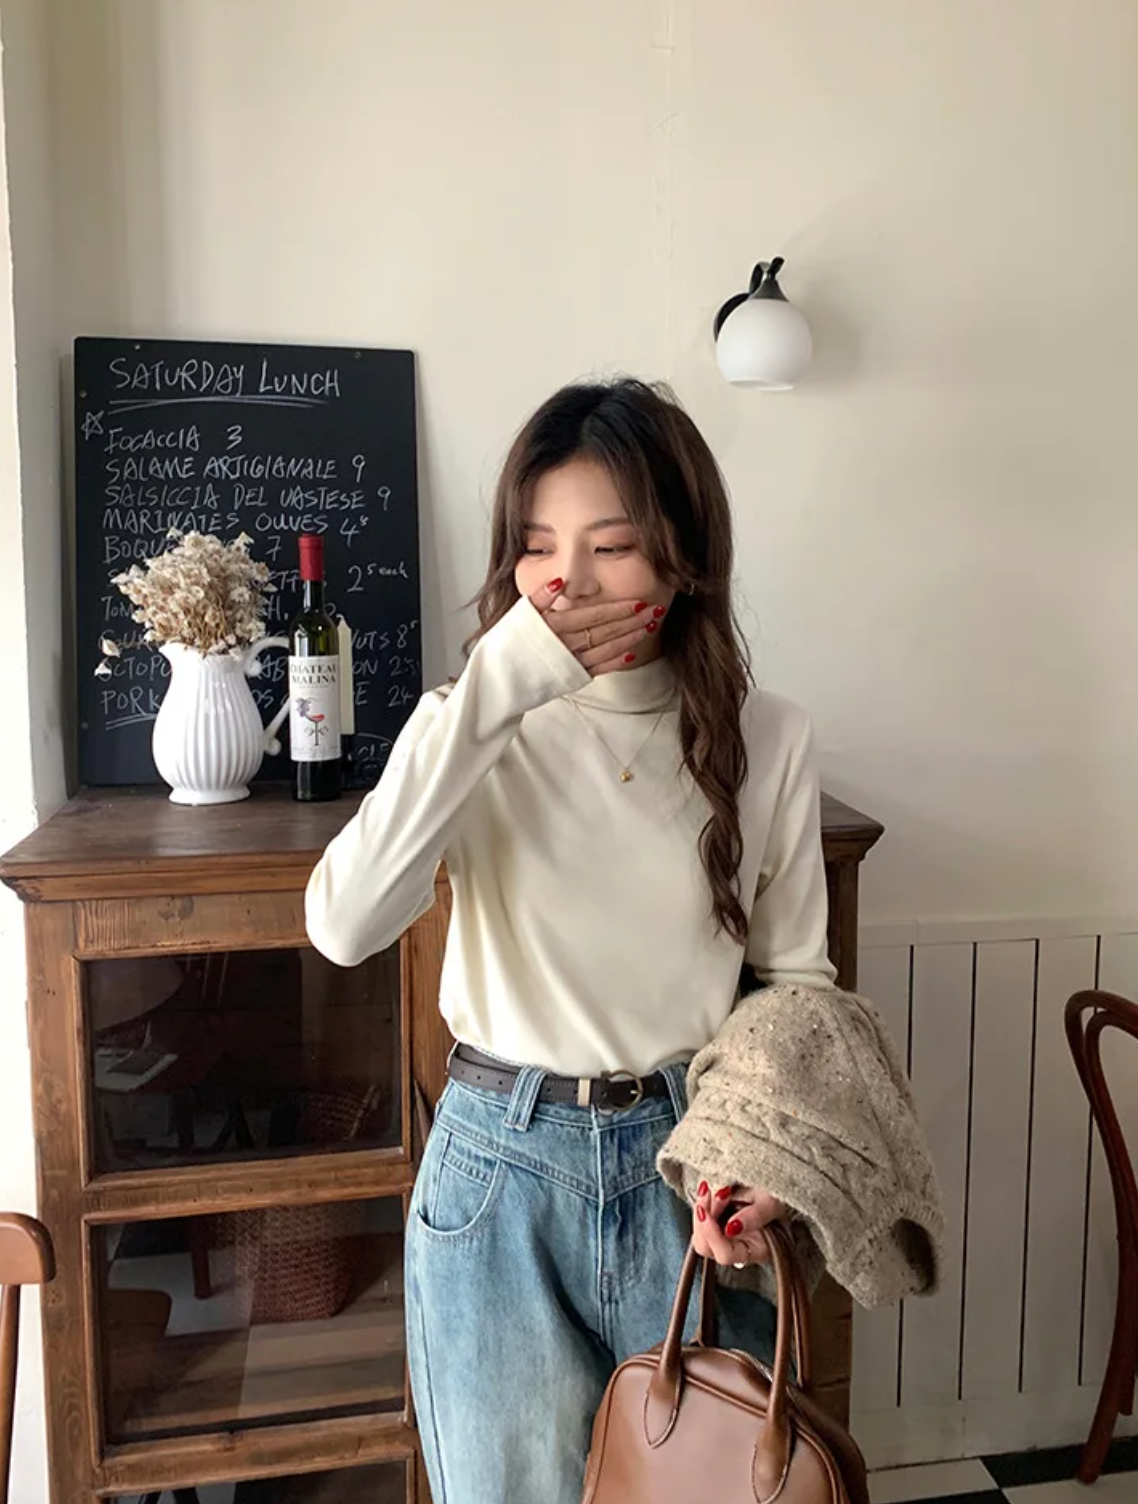 [Korean Style] Solid Color Basic Mock Neck Pullover